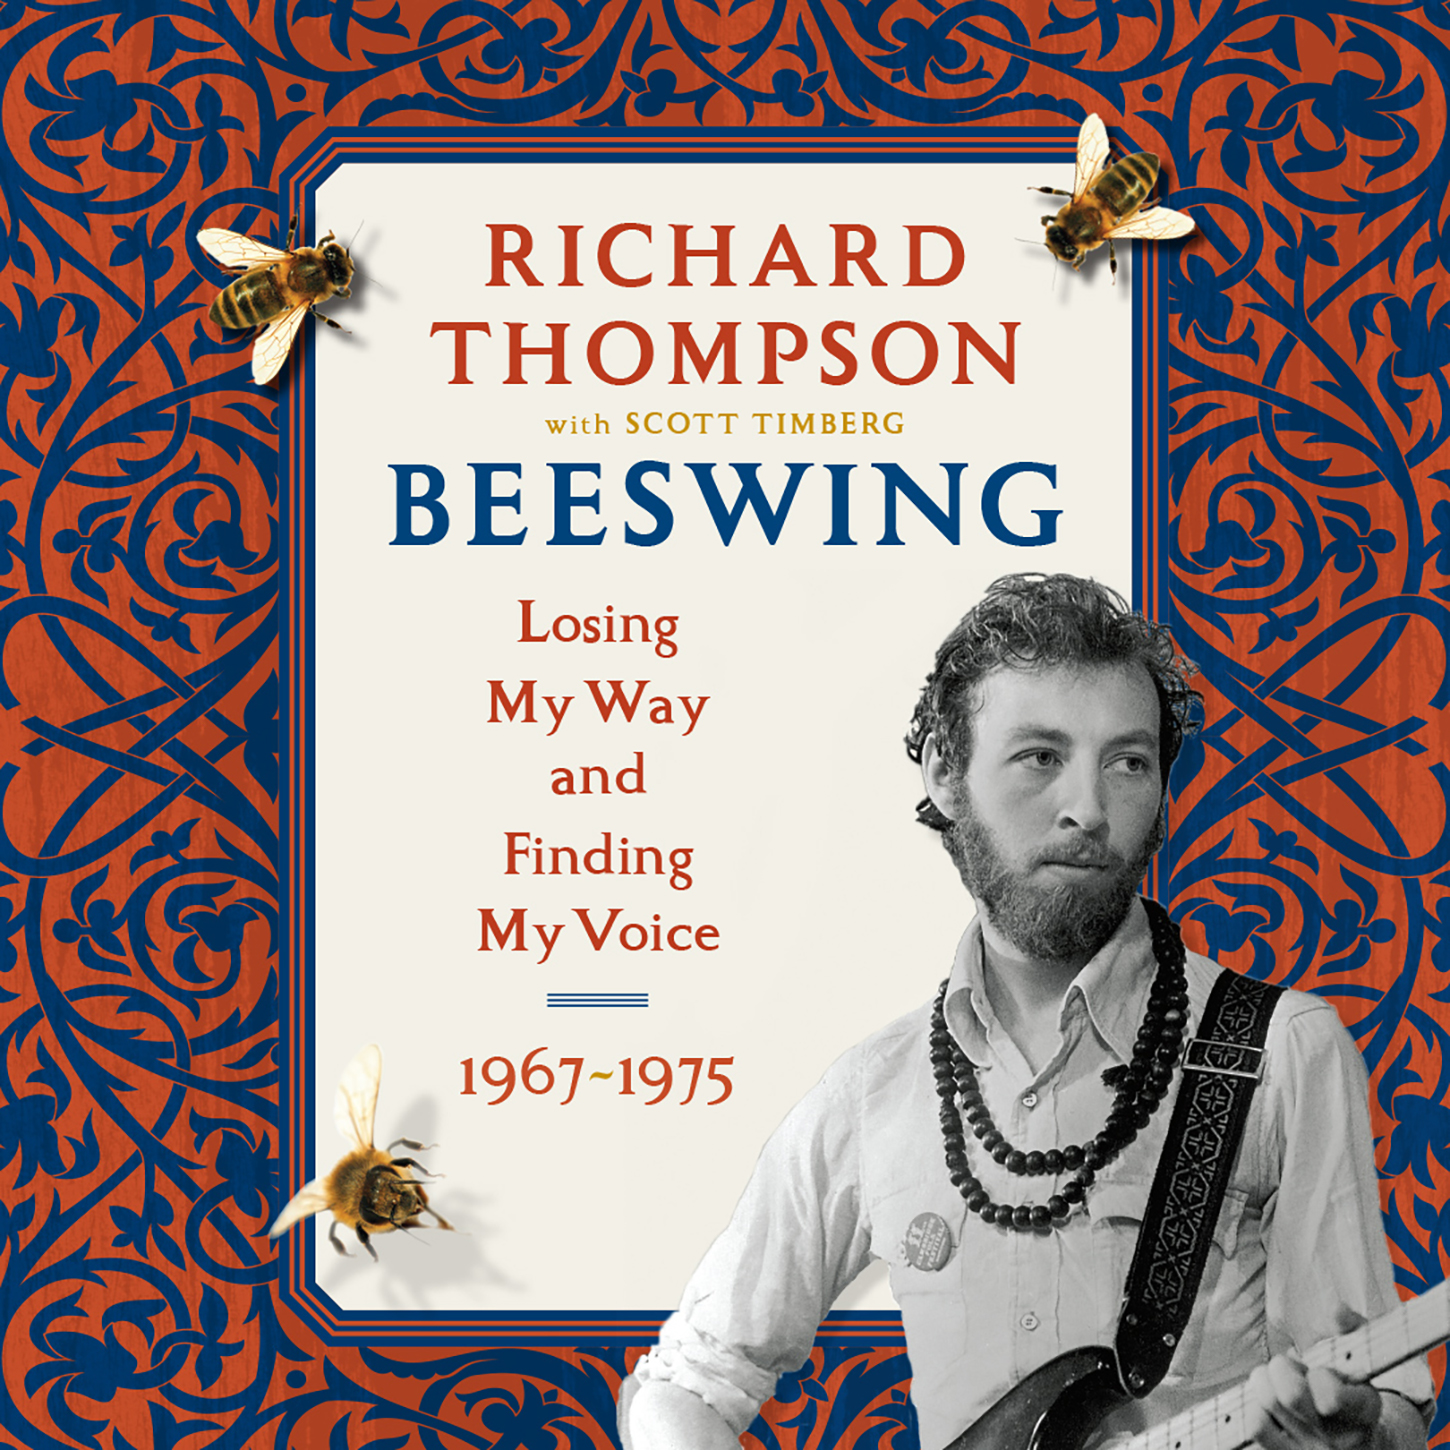 Richard Thompson - 2021 - Beeswing - The EP